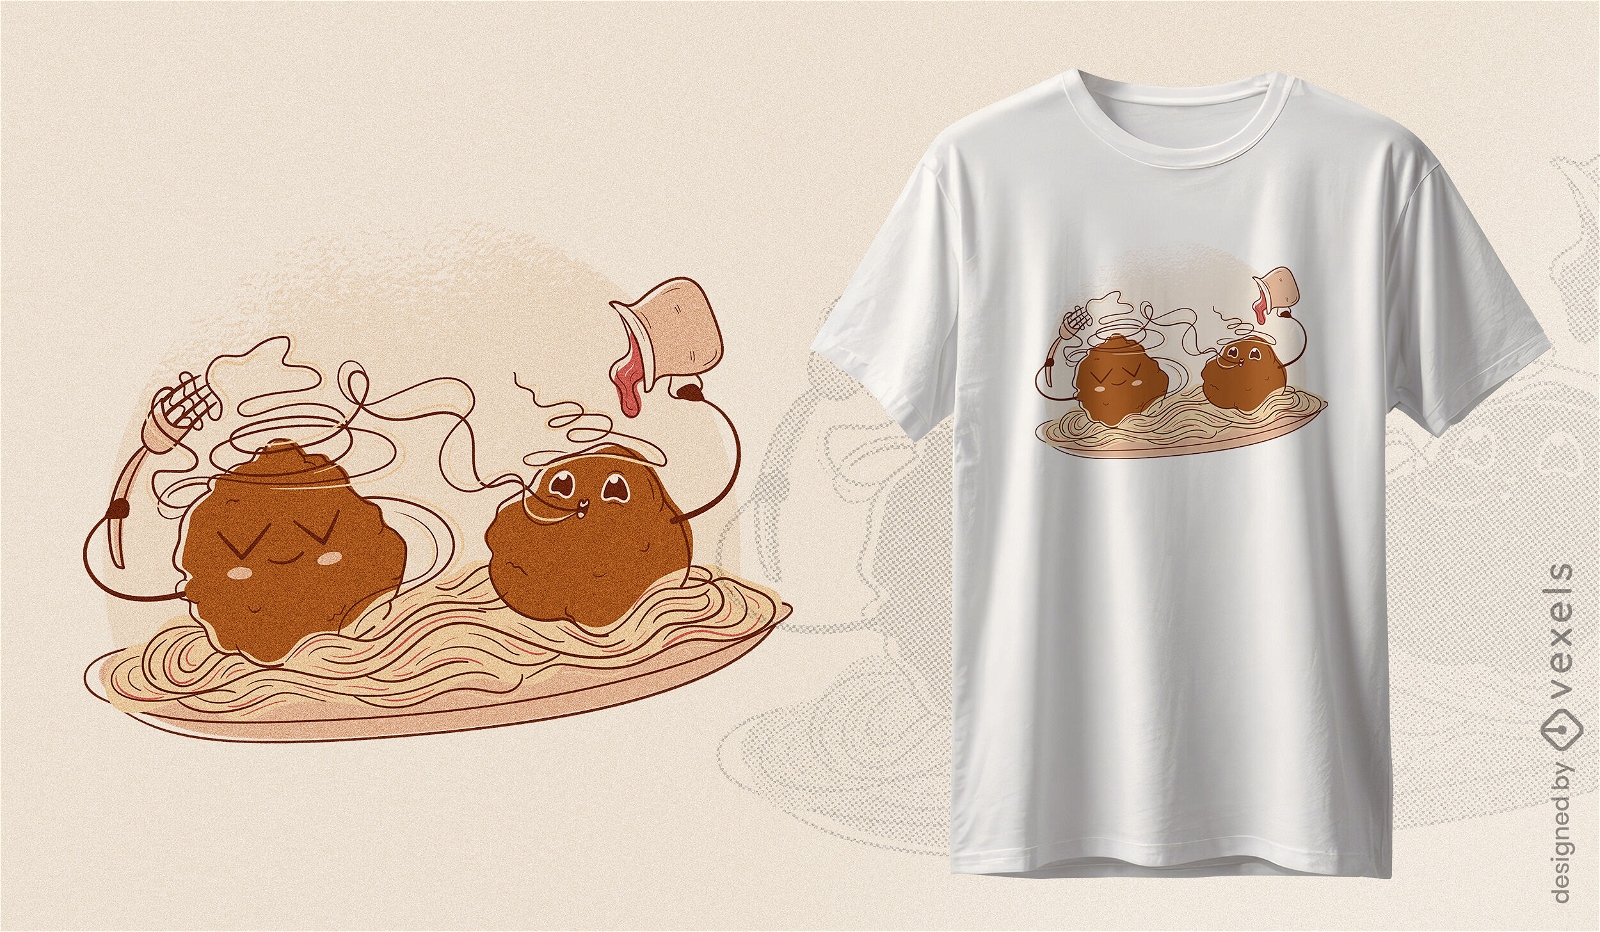 Spaghetti and meatballs t-shirt design